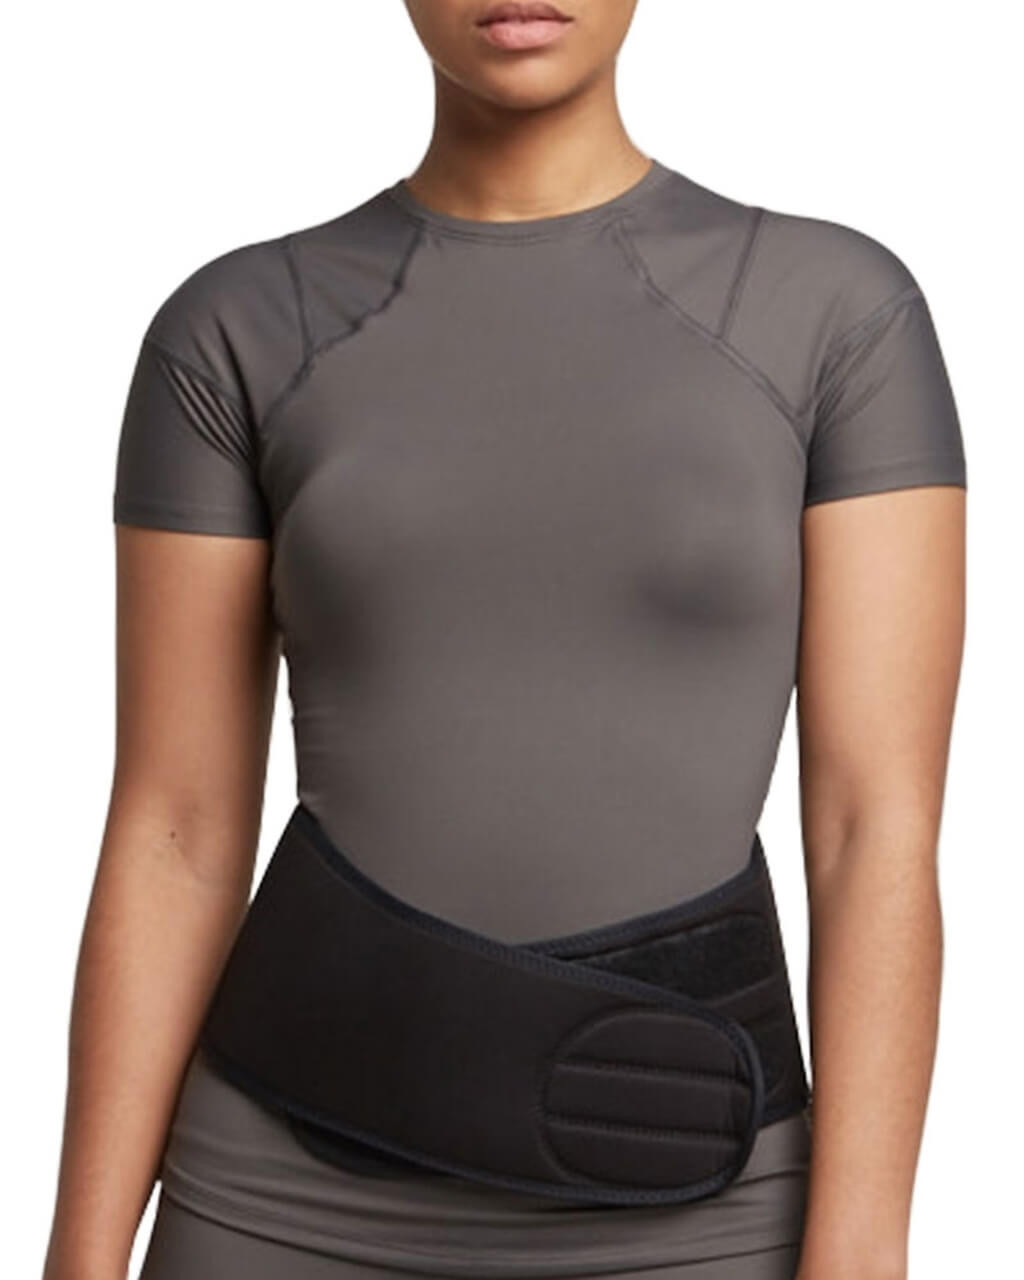 Tommie Copper Women's Full Back Support Shirt Pain Brace Pro Fit